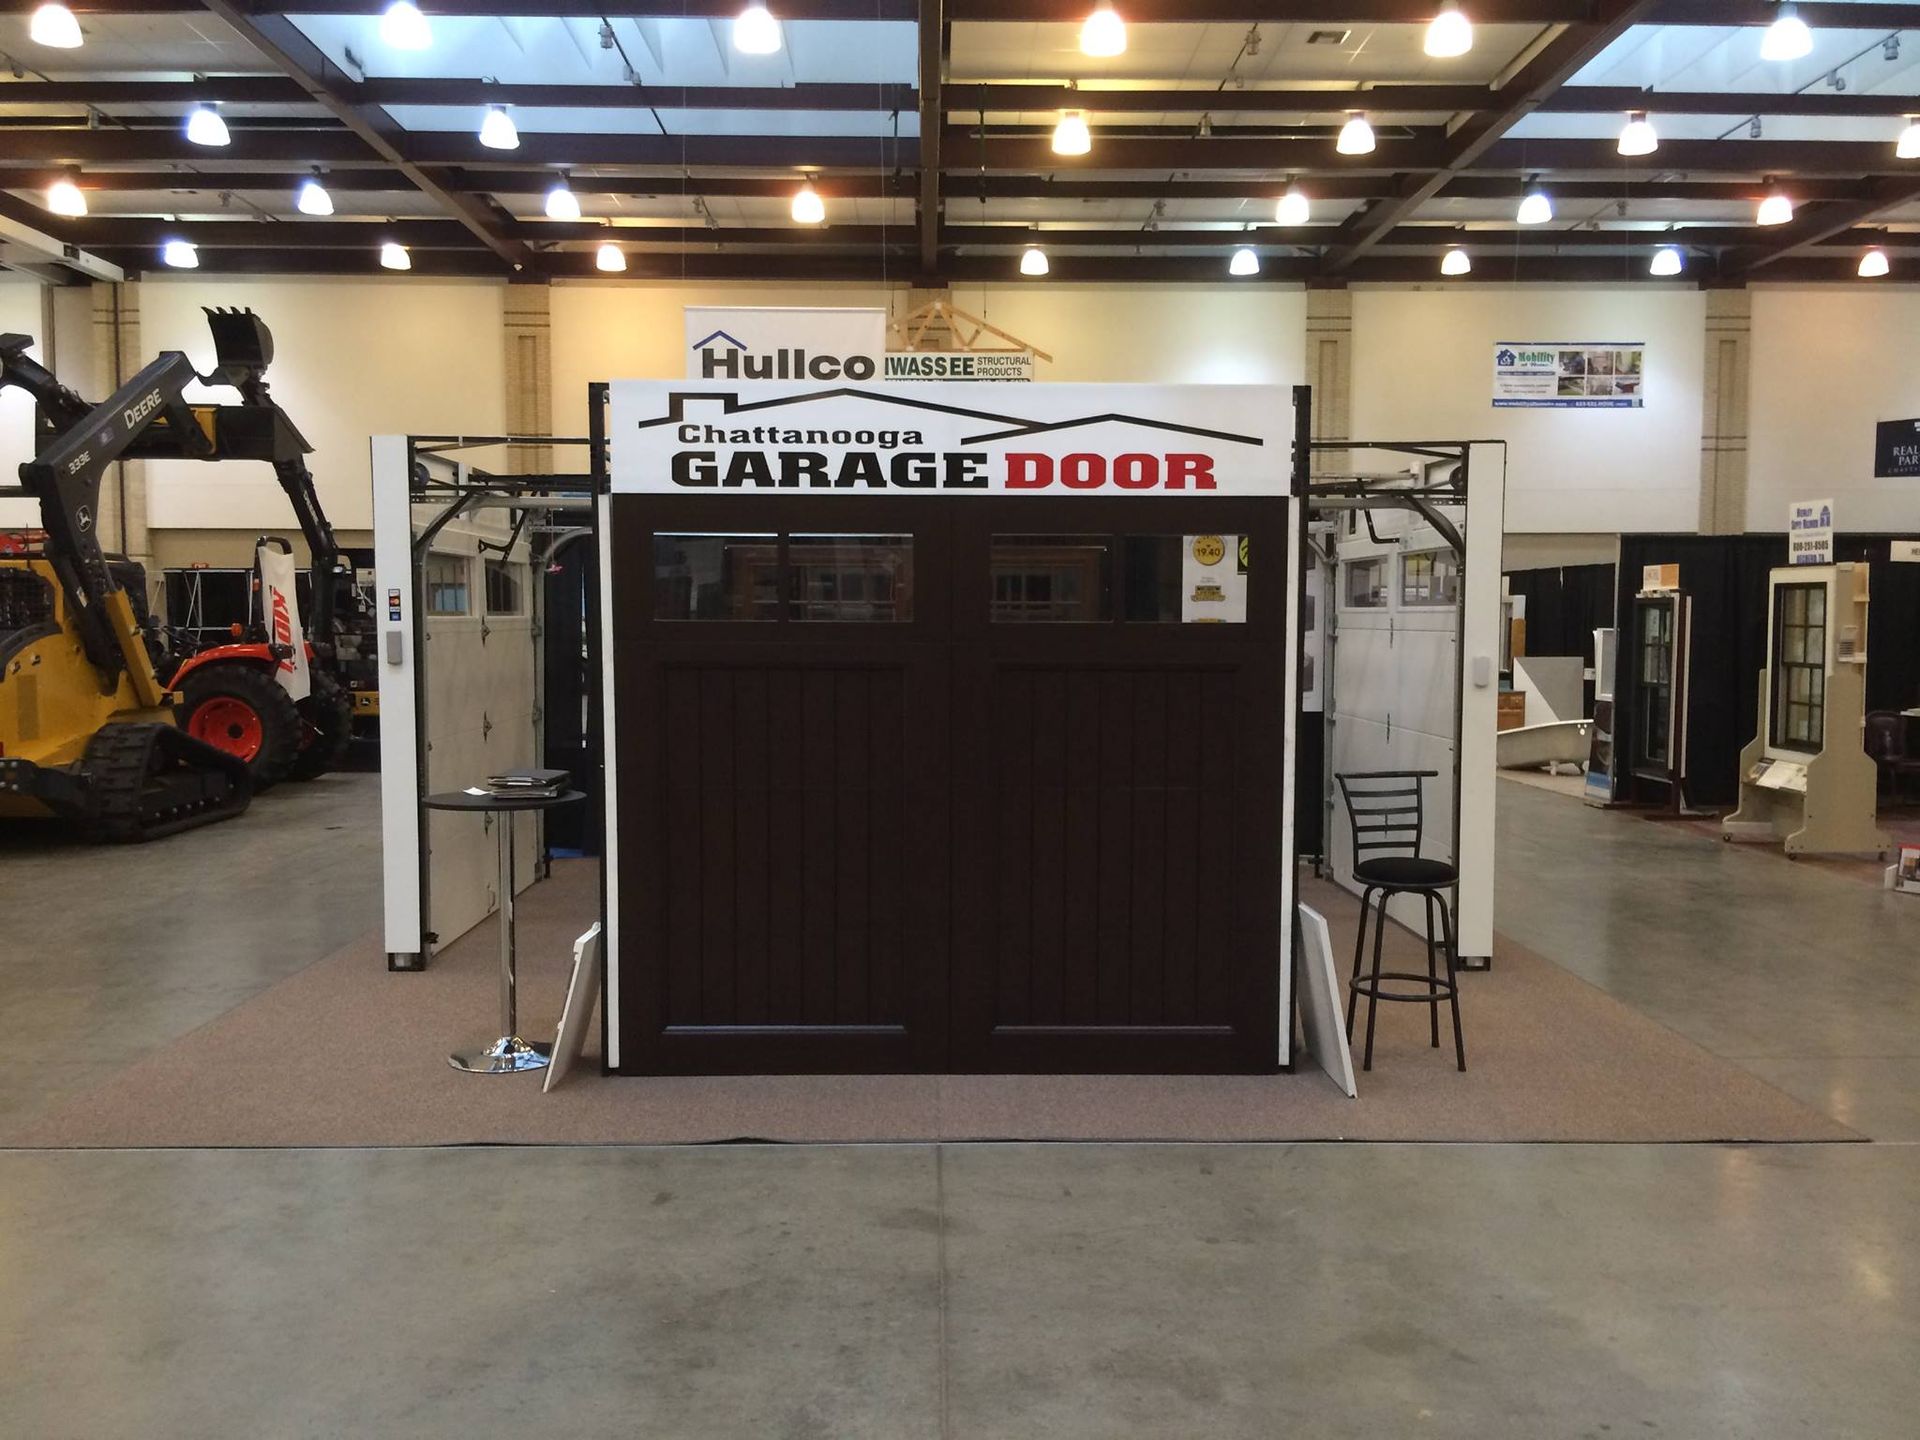 A garage door is displayed in a large room